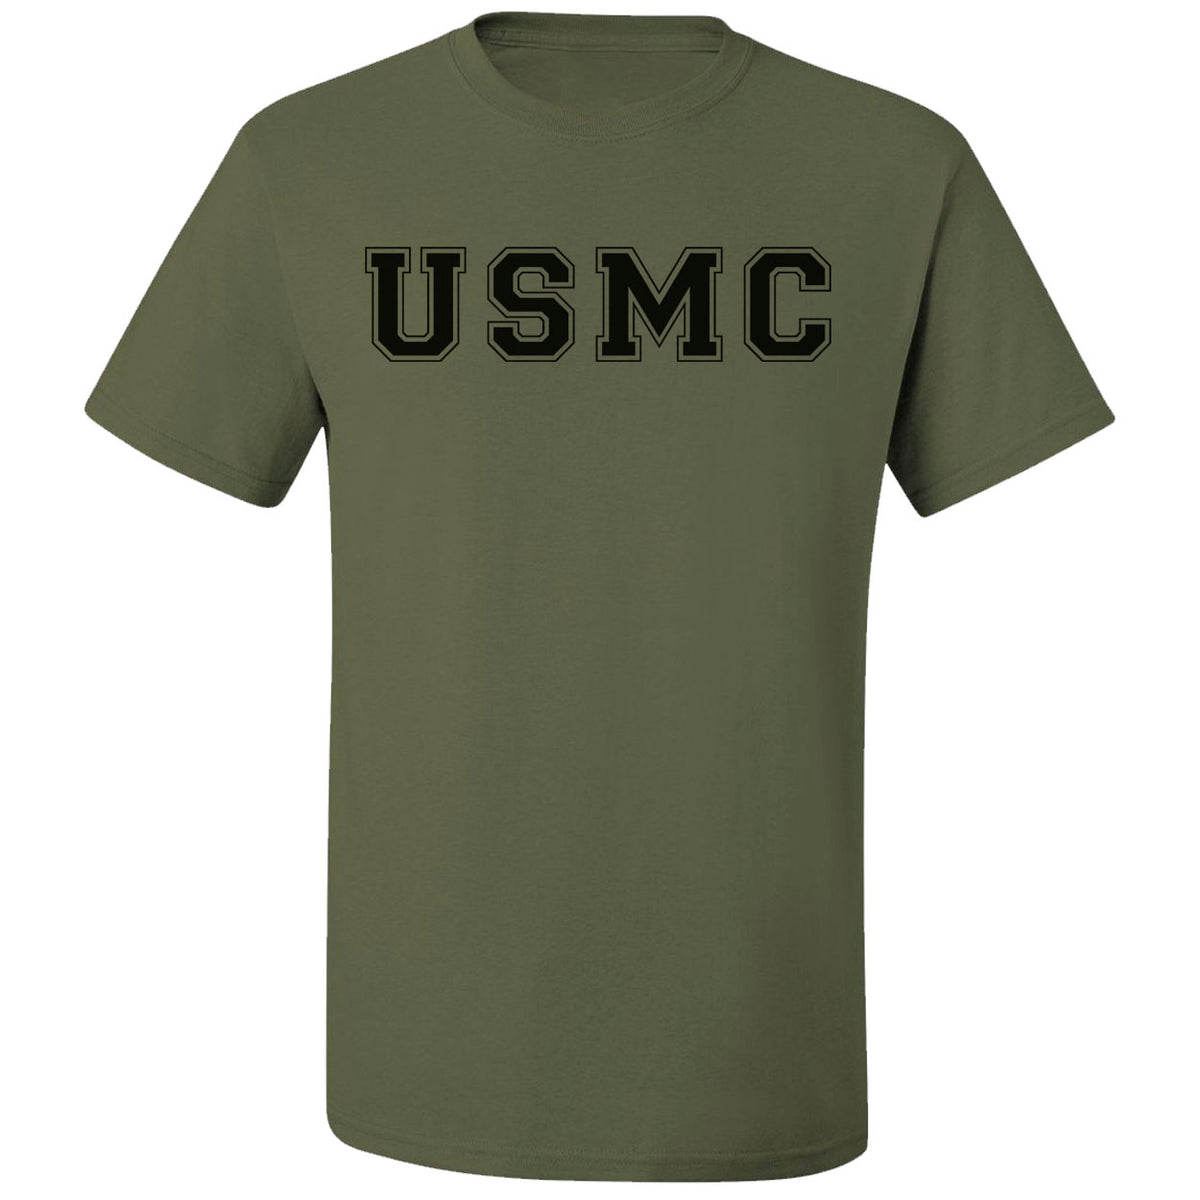 Limited Edition Black USMC T-Shirt